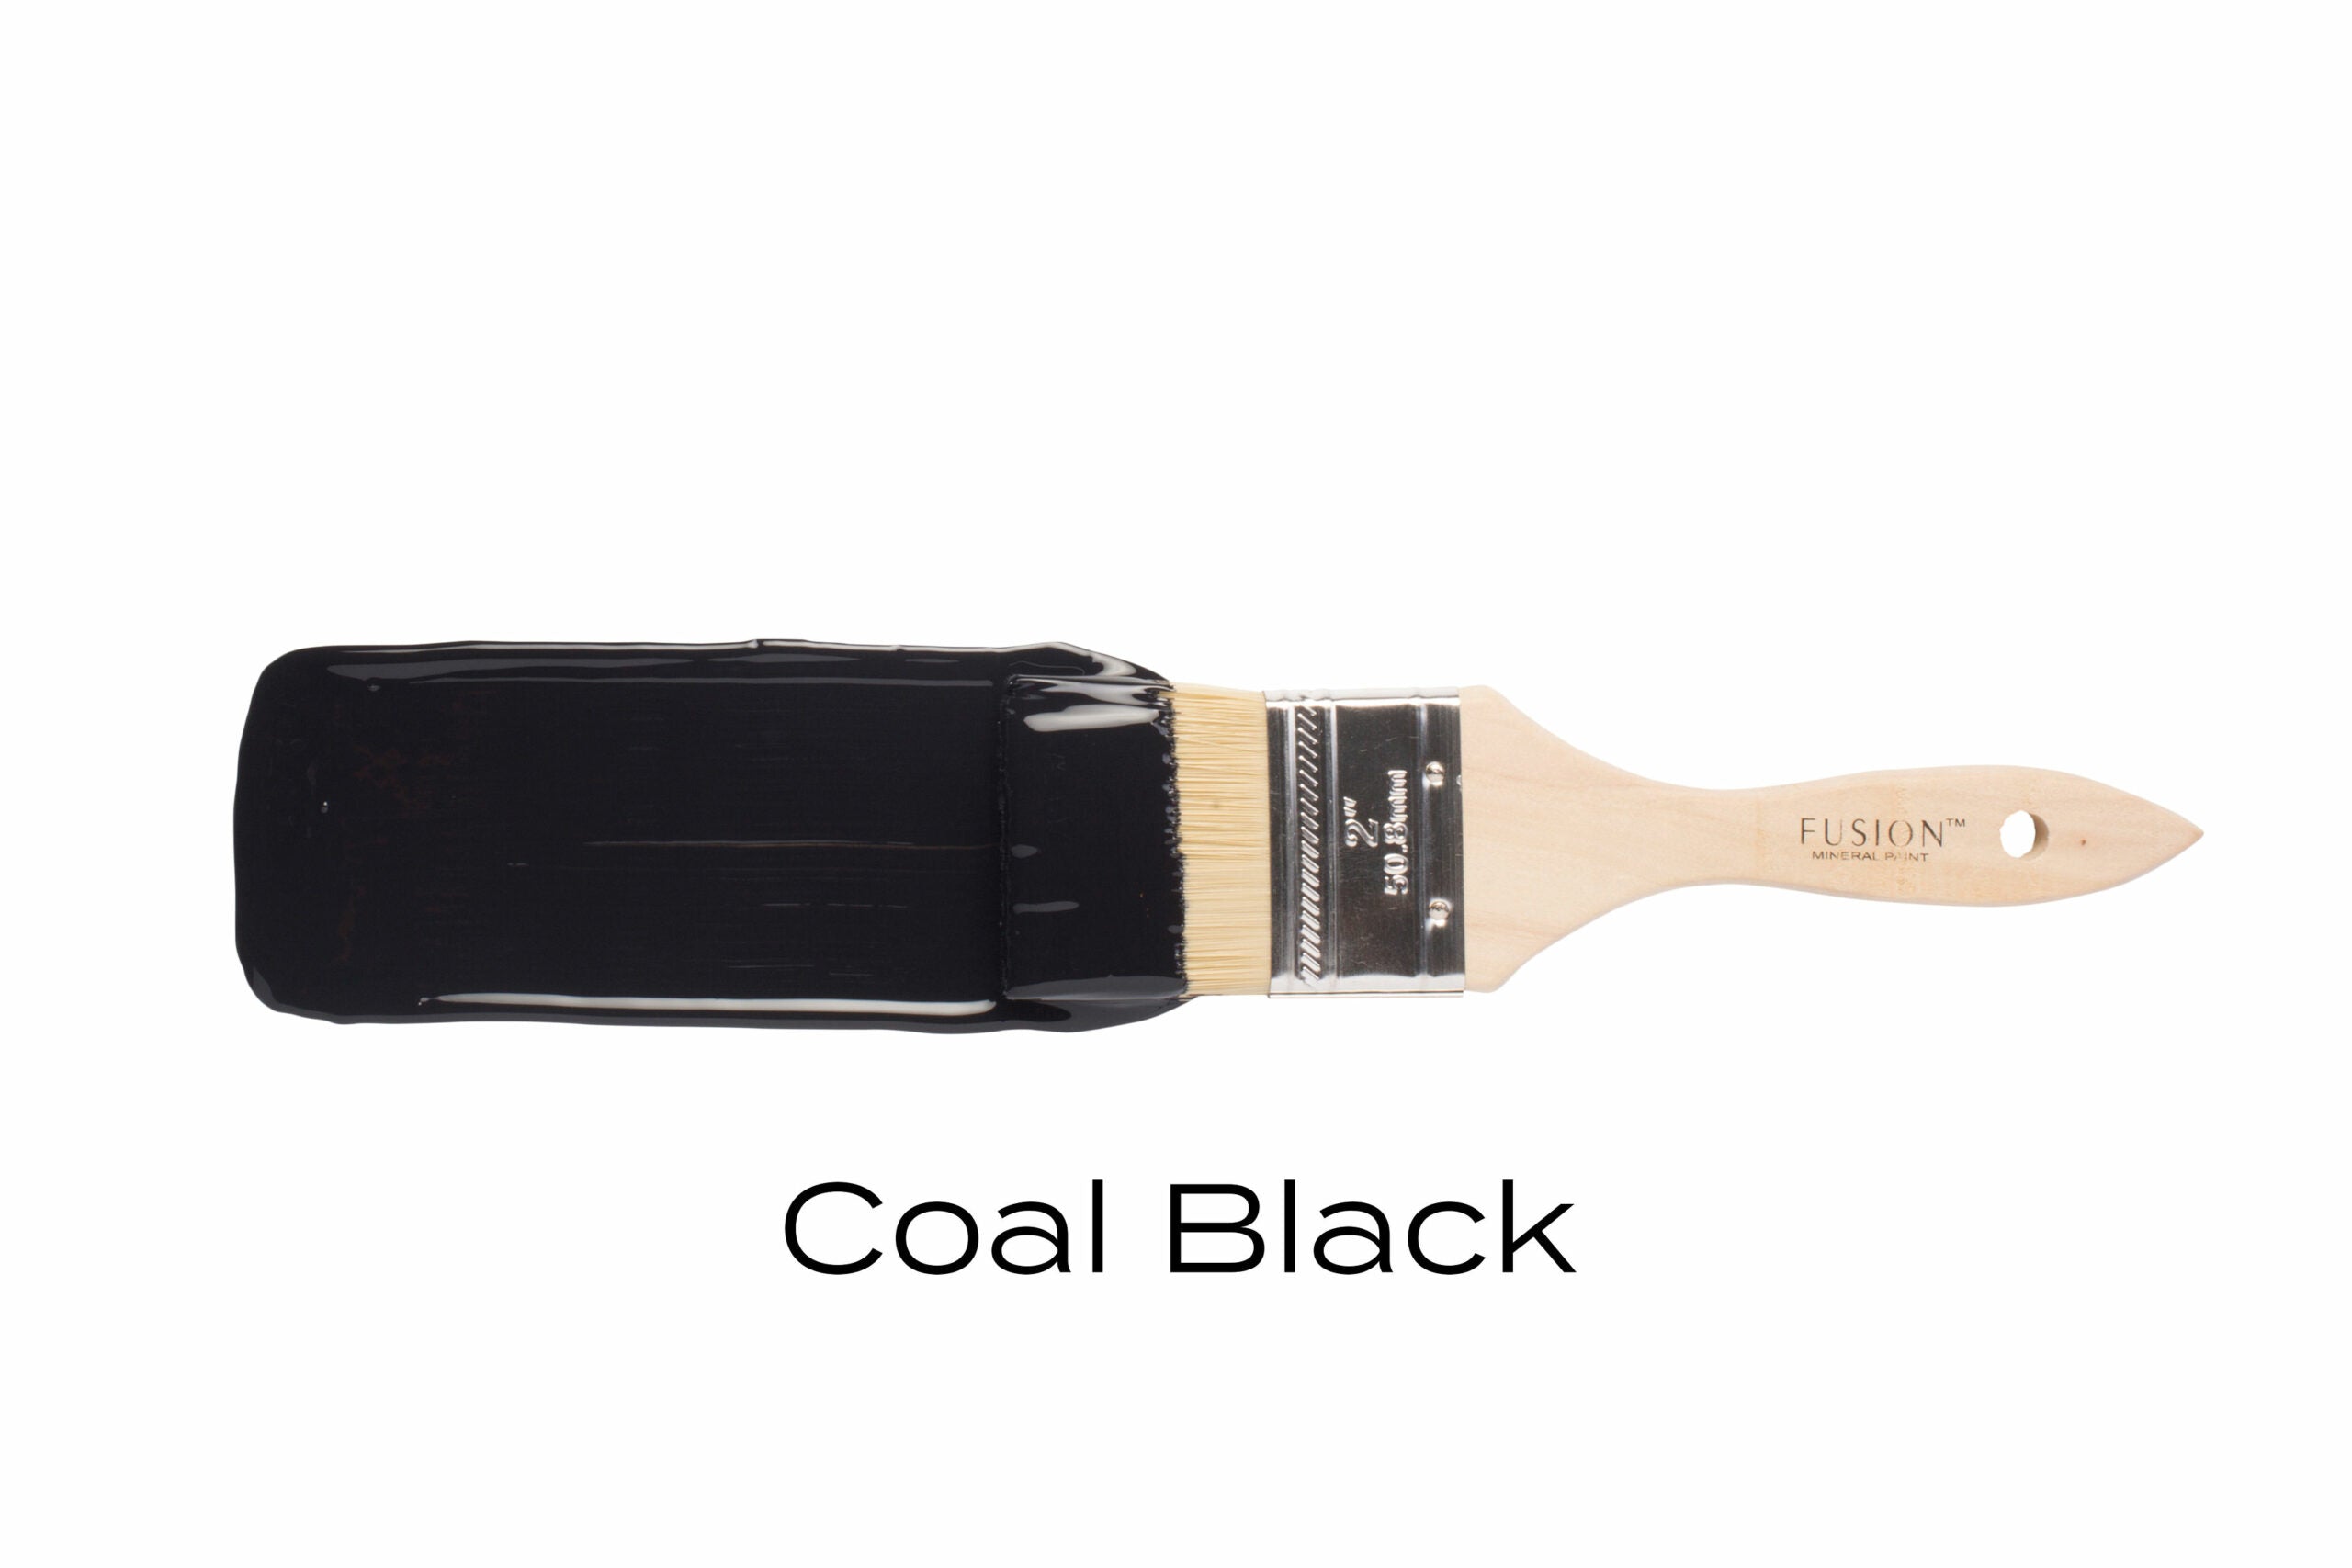 Coal Black